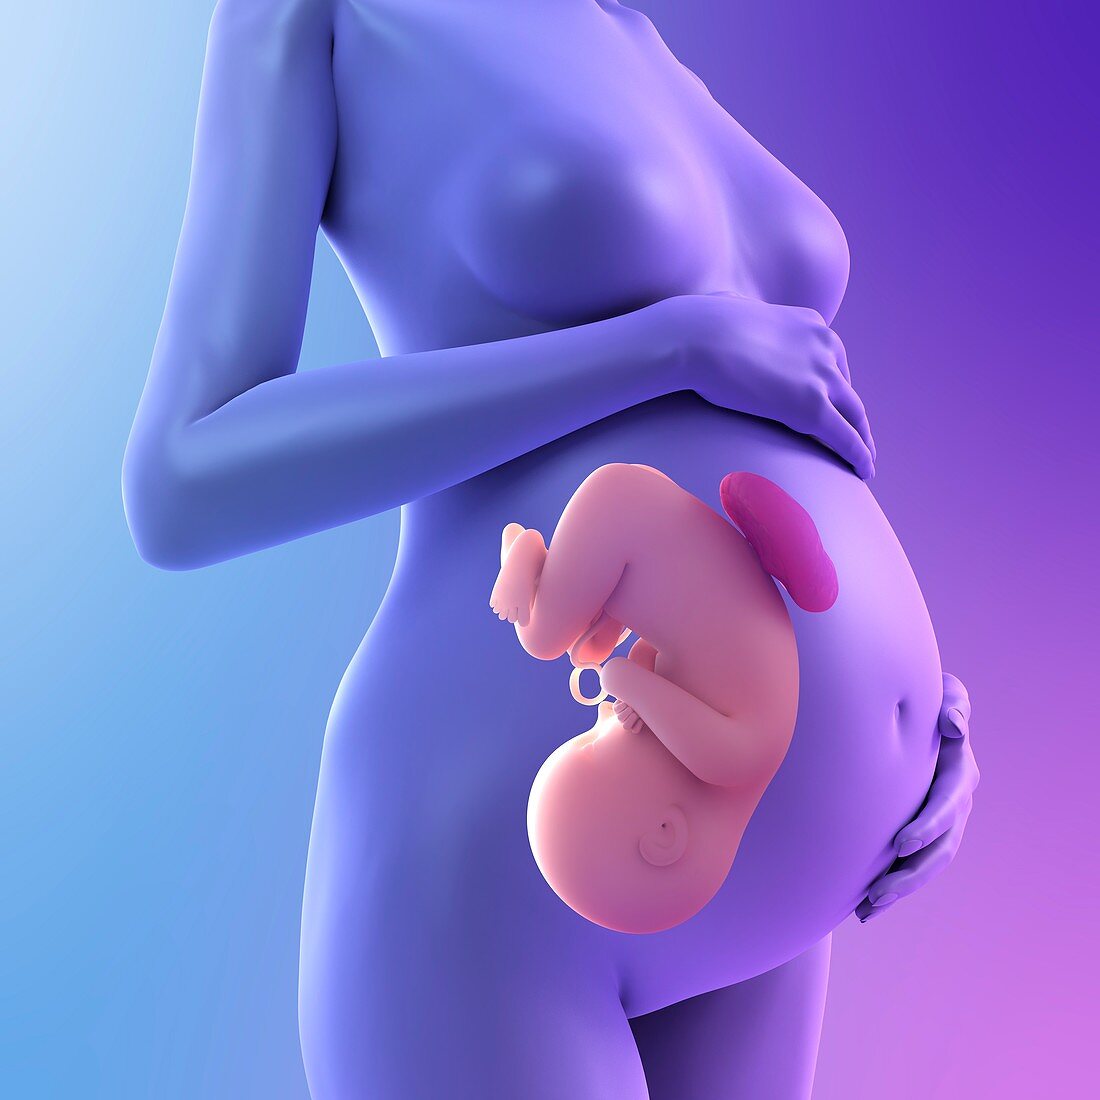 Pregnancy,conceptual artwork